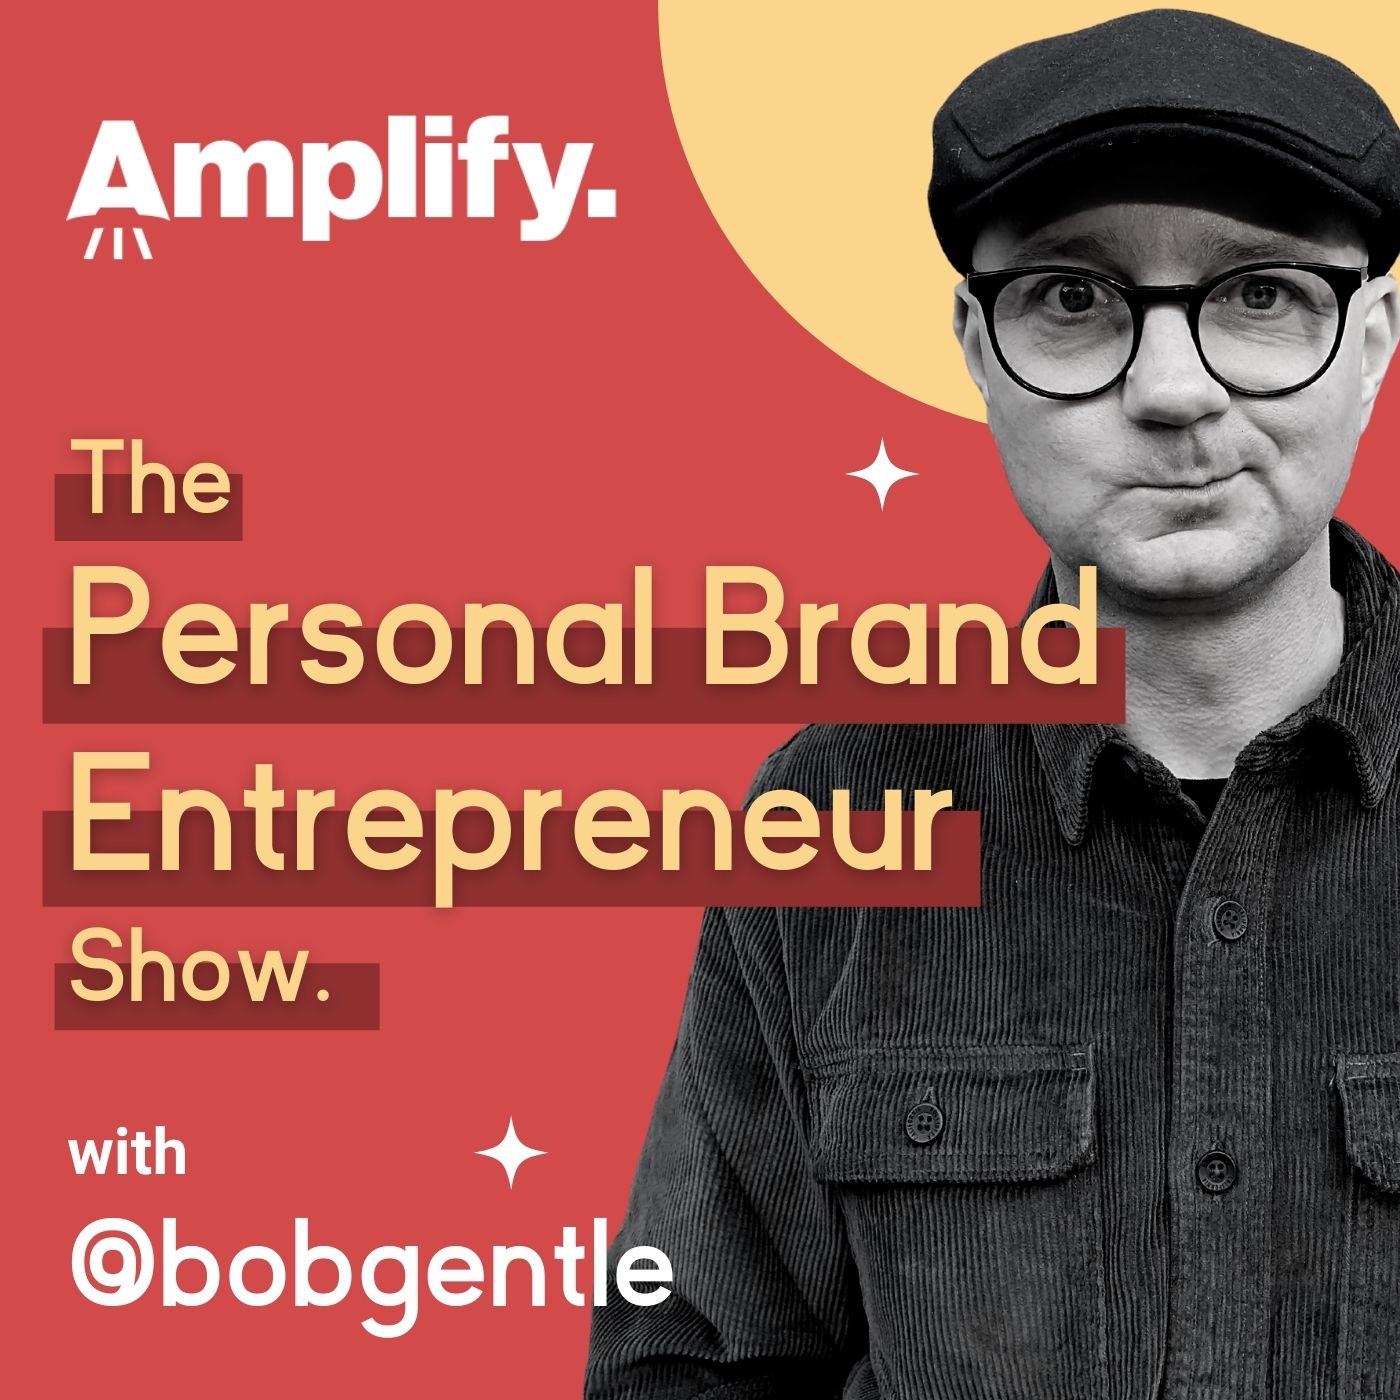 Artwork for podcast The Personal Brand Entrepreneur Show.